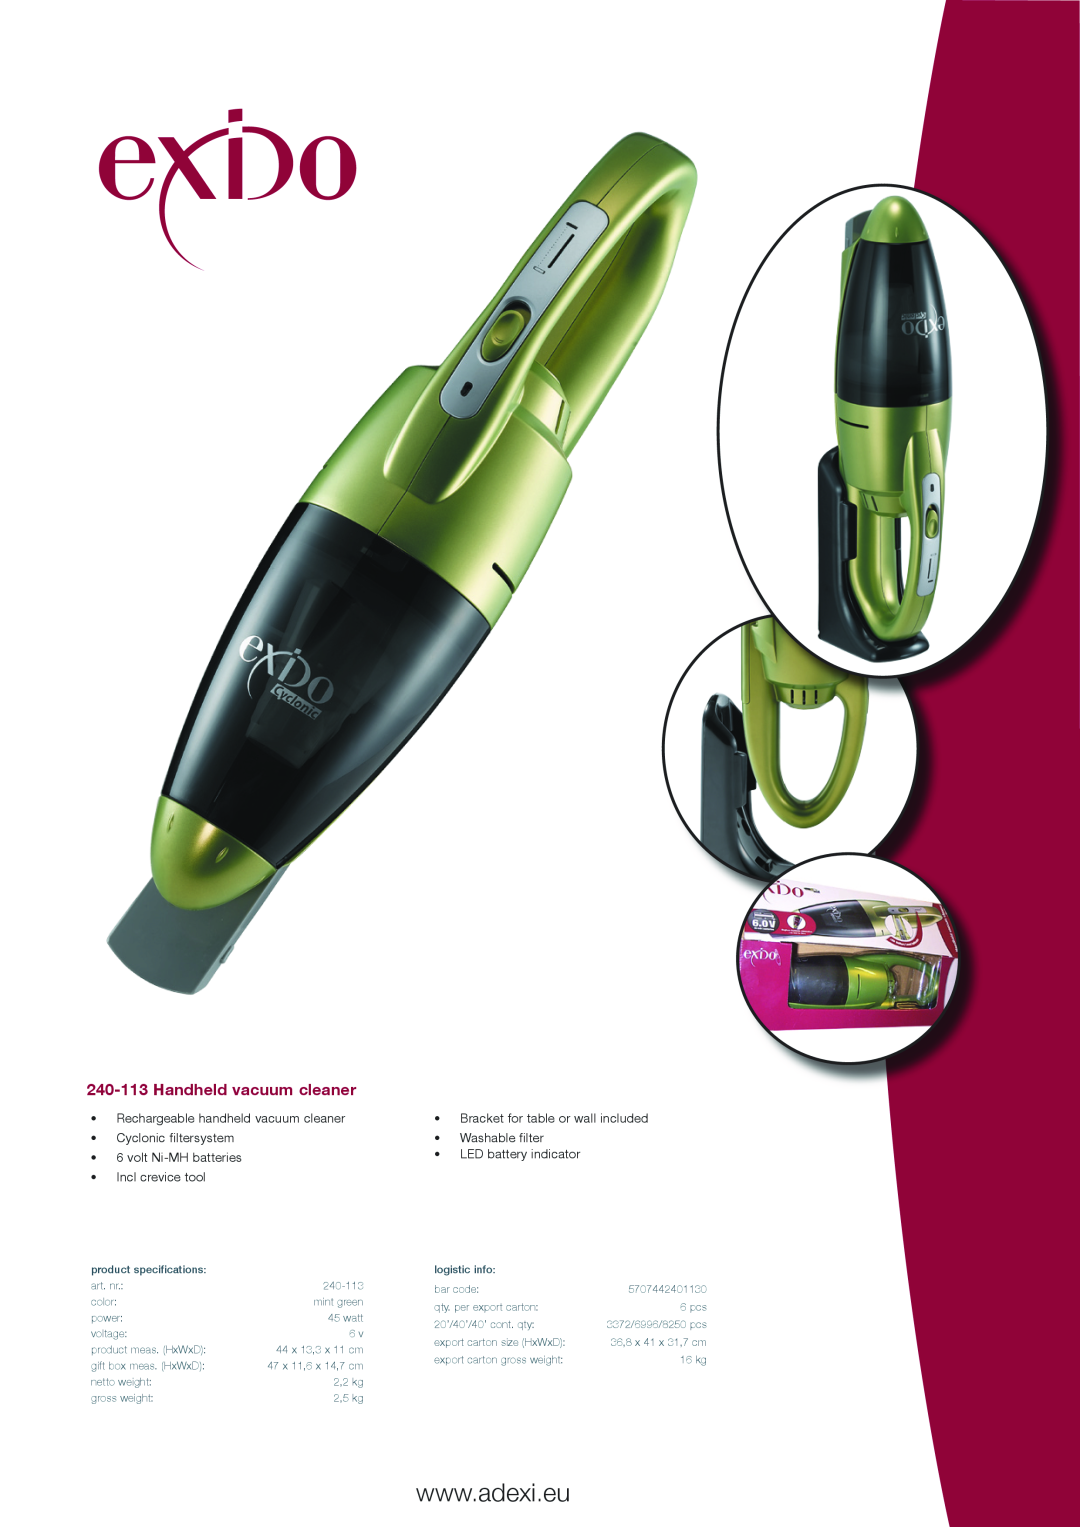 Melissa specifications 240-113Handheld vacuum cleaner, Rechargeable handheld vacuum cleaner, Incl crevice tool 